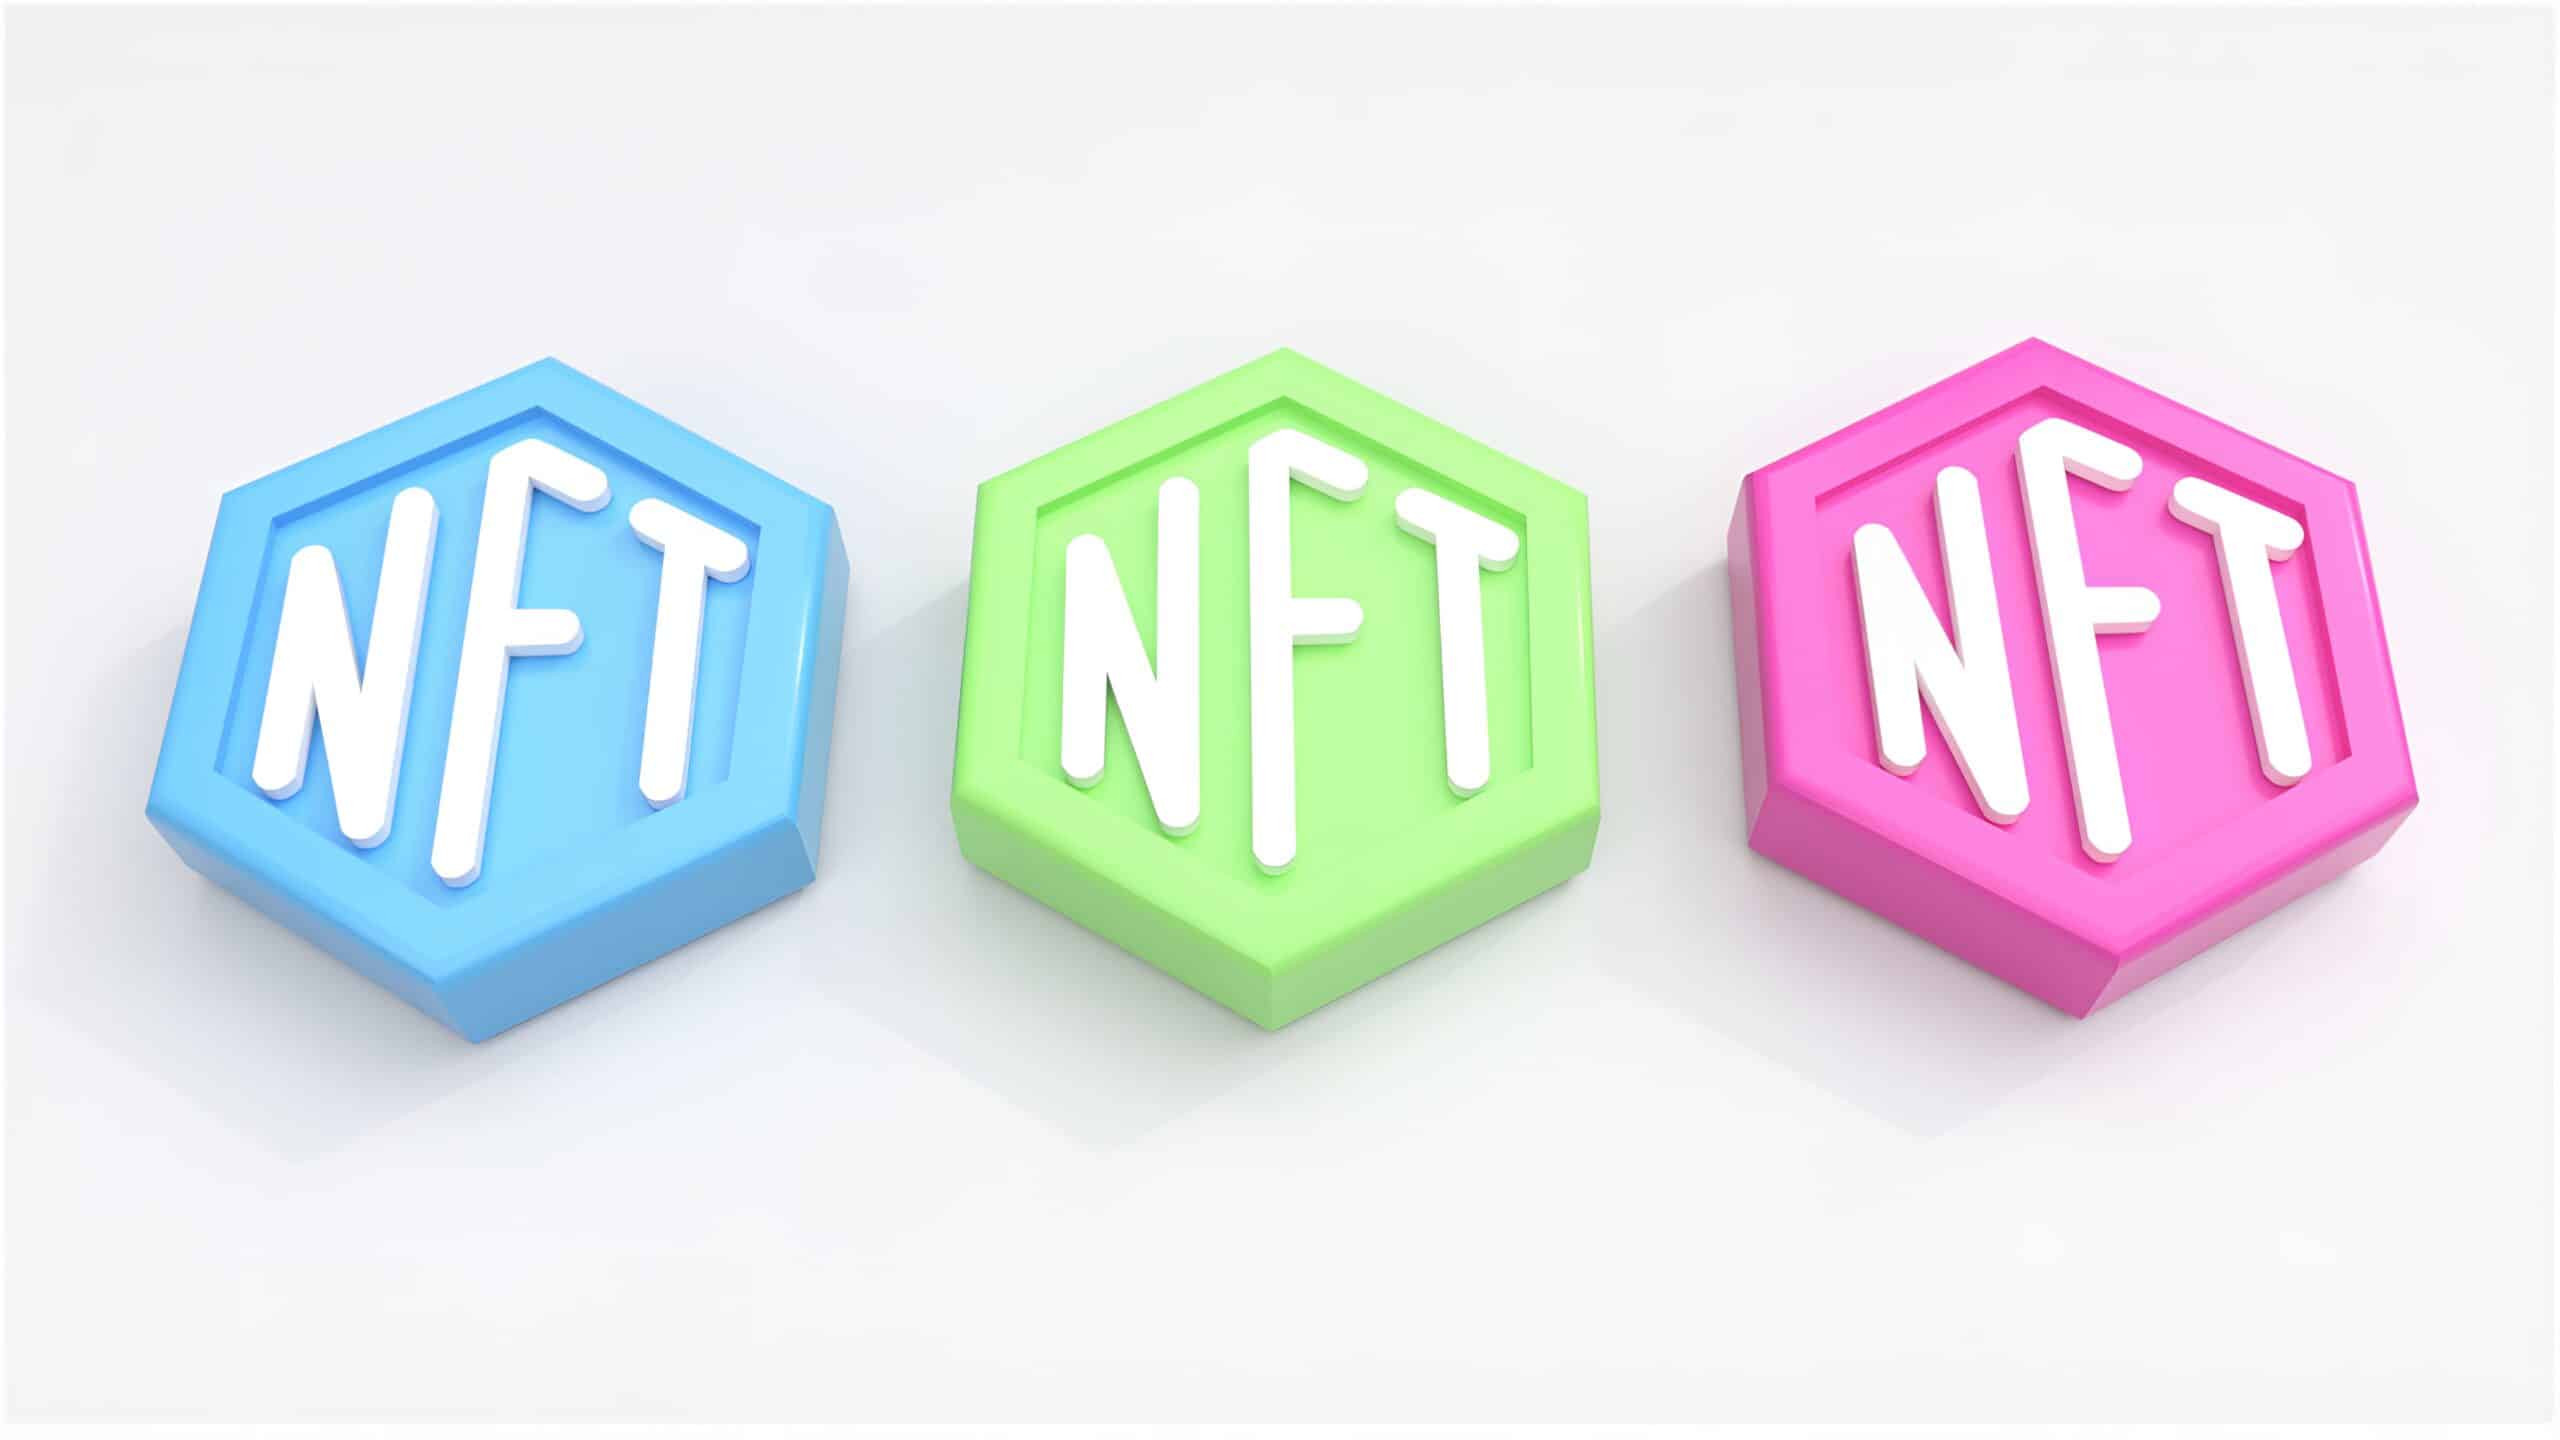 Meta kết thúc NFT trên Facebook và Instagram